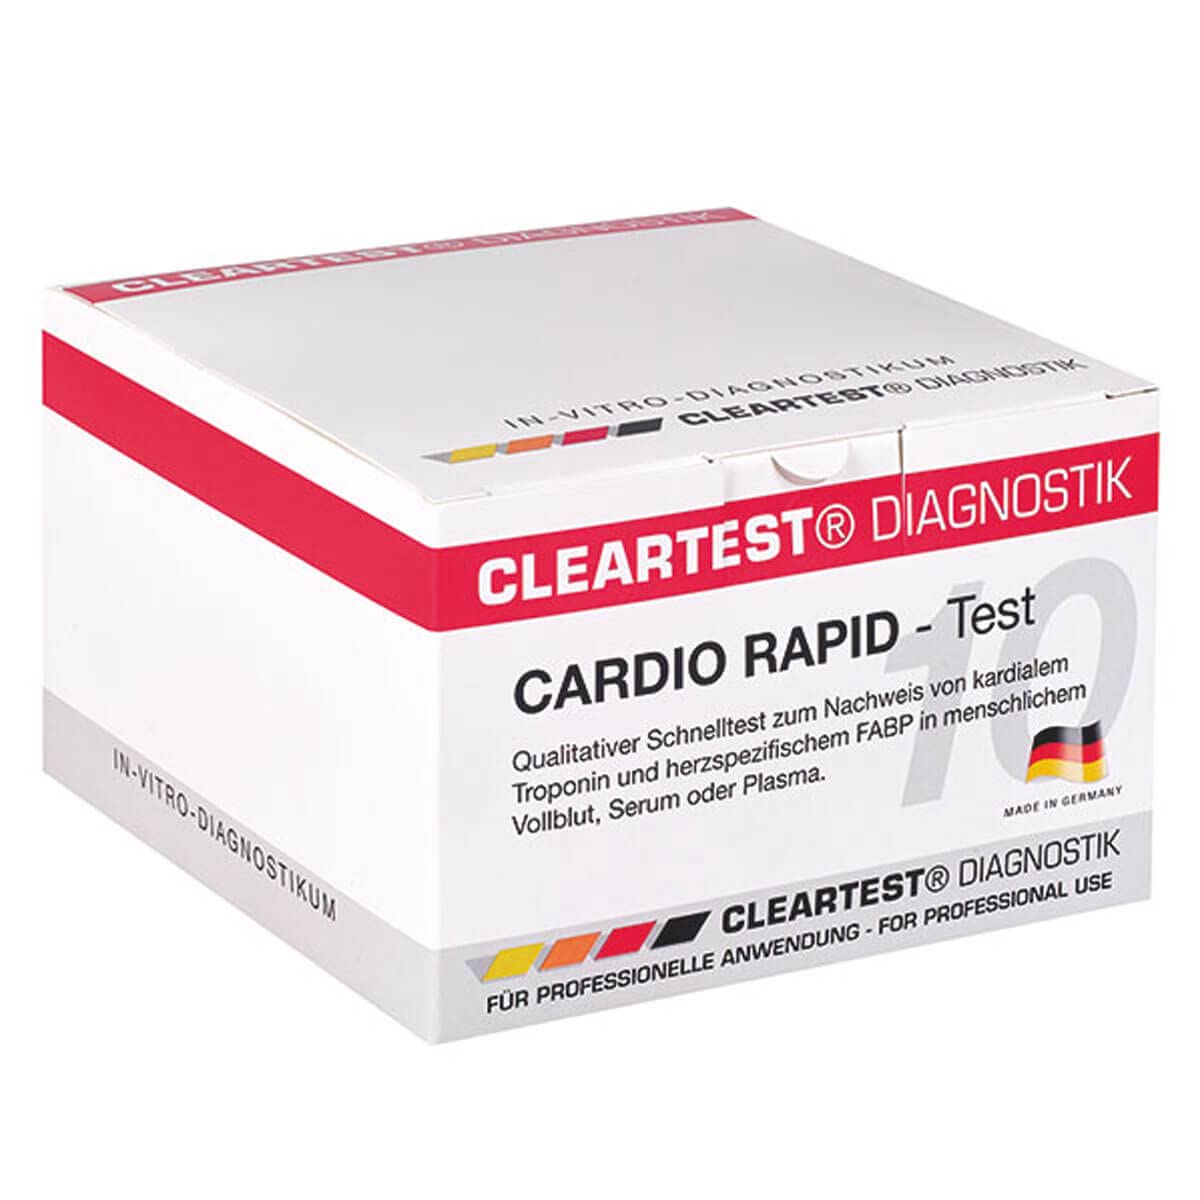 Servoprax 119729.1 Cleartest Cardio Rapid Testkit, Infarktdiagnostik Bereits 20 Minuten Nach Dem Ersten Symptom, 10 Stück